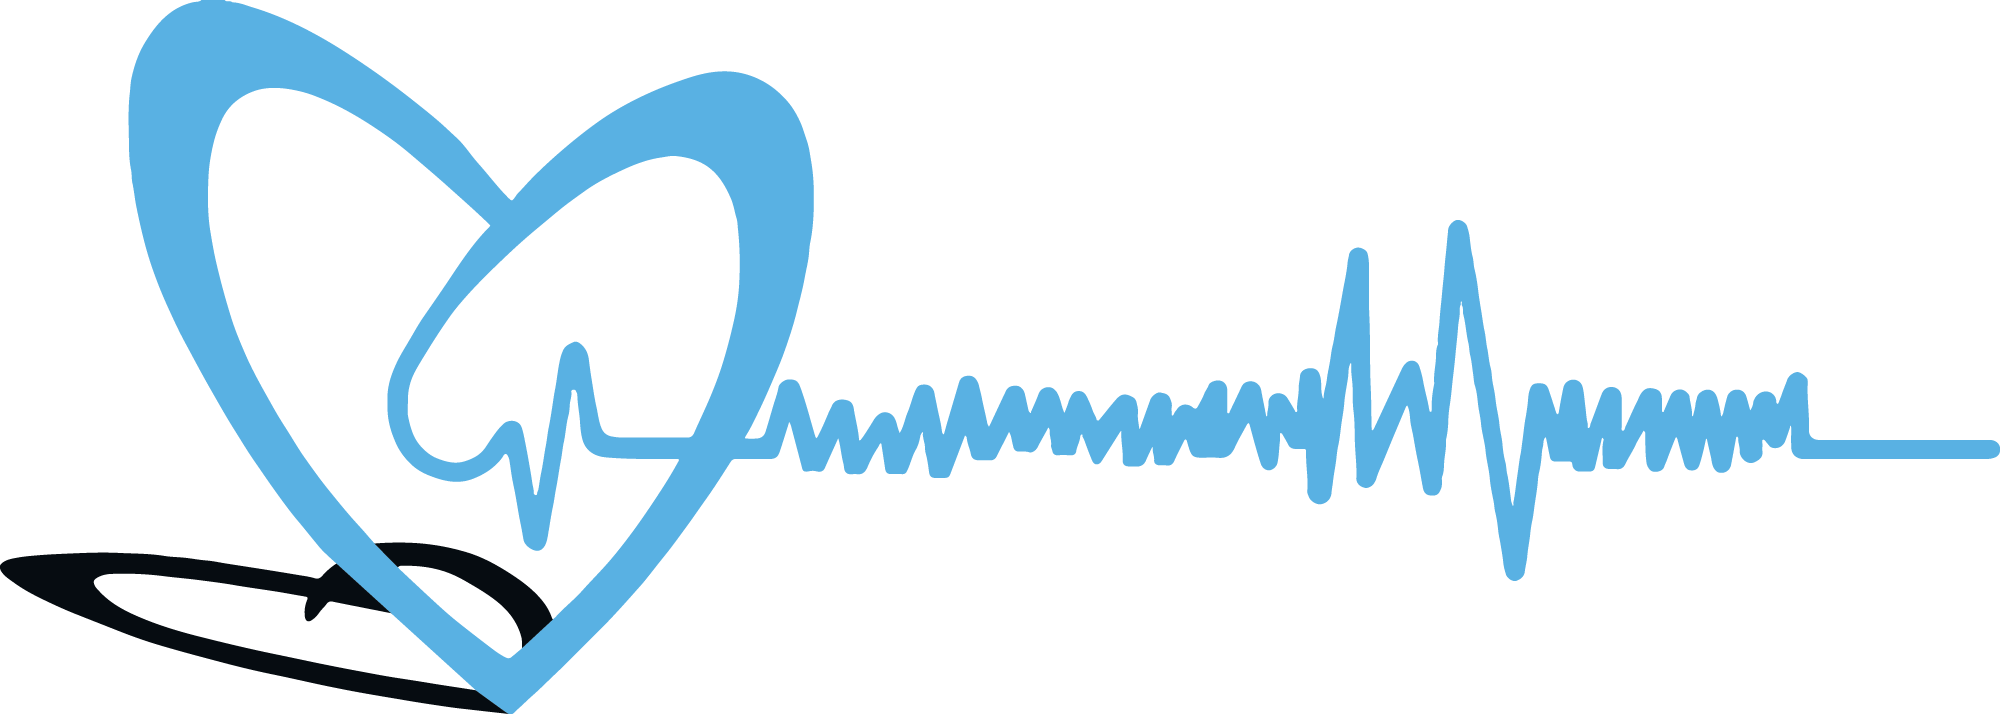 kardio stojmenov logo